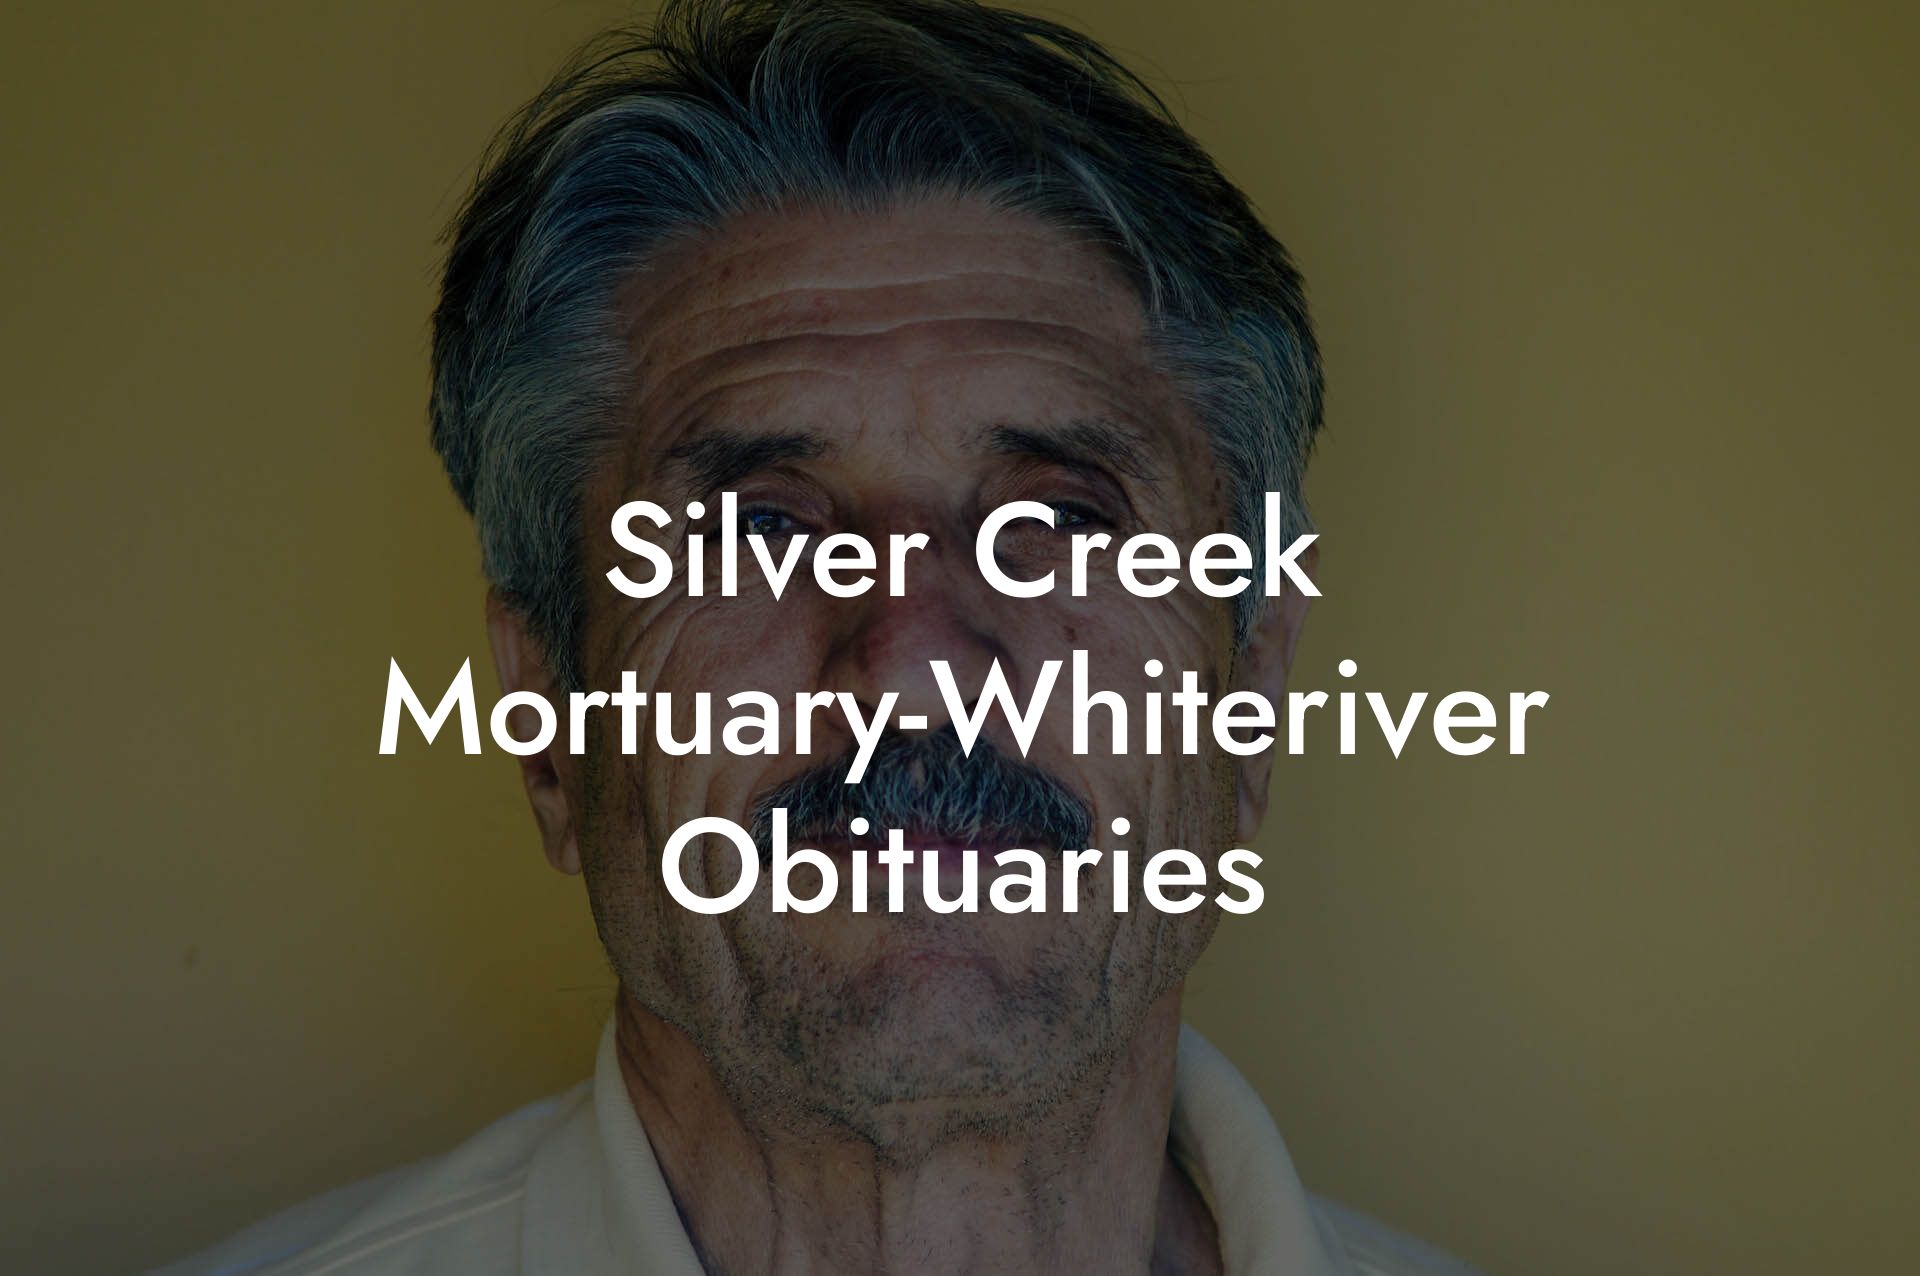 Silver Creek Mortuary-Whiteriver Obituaries